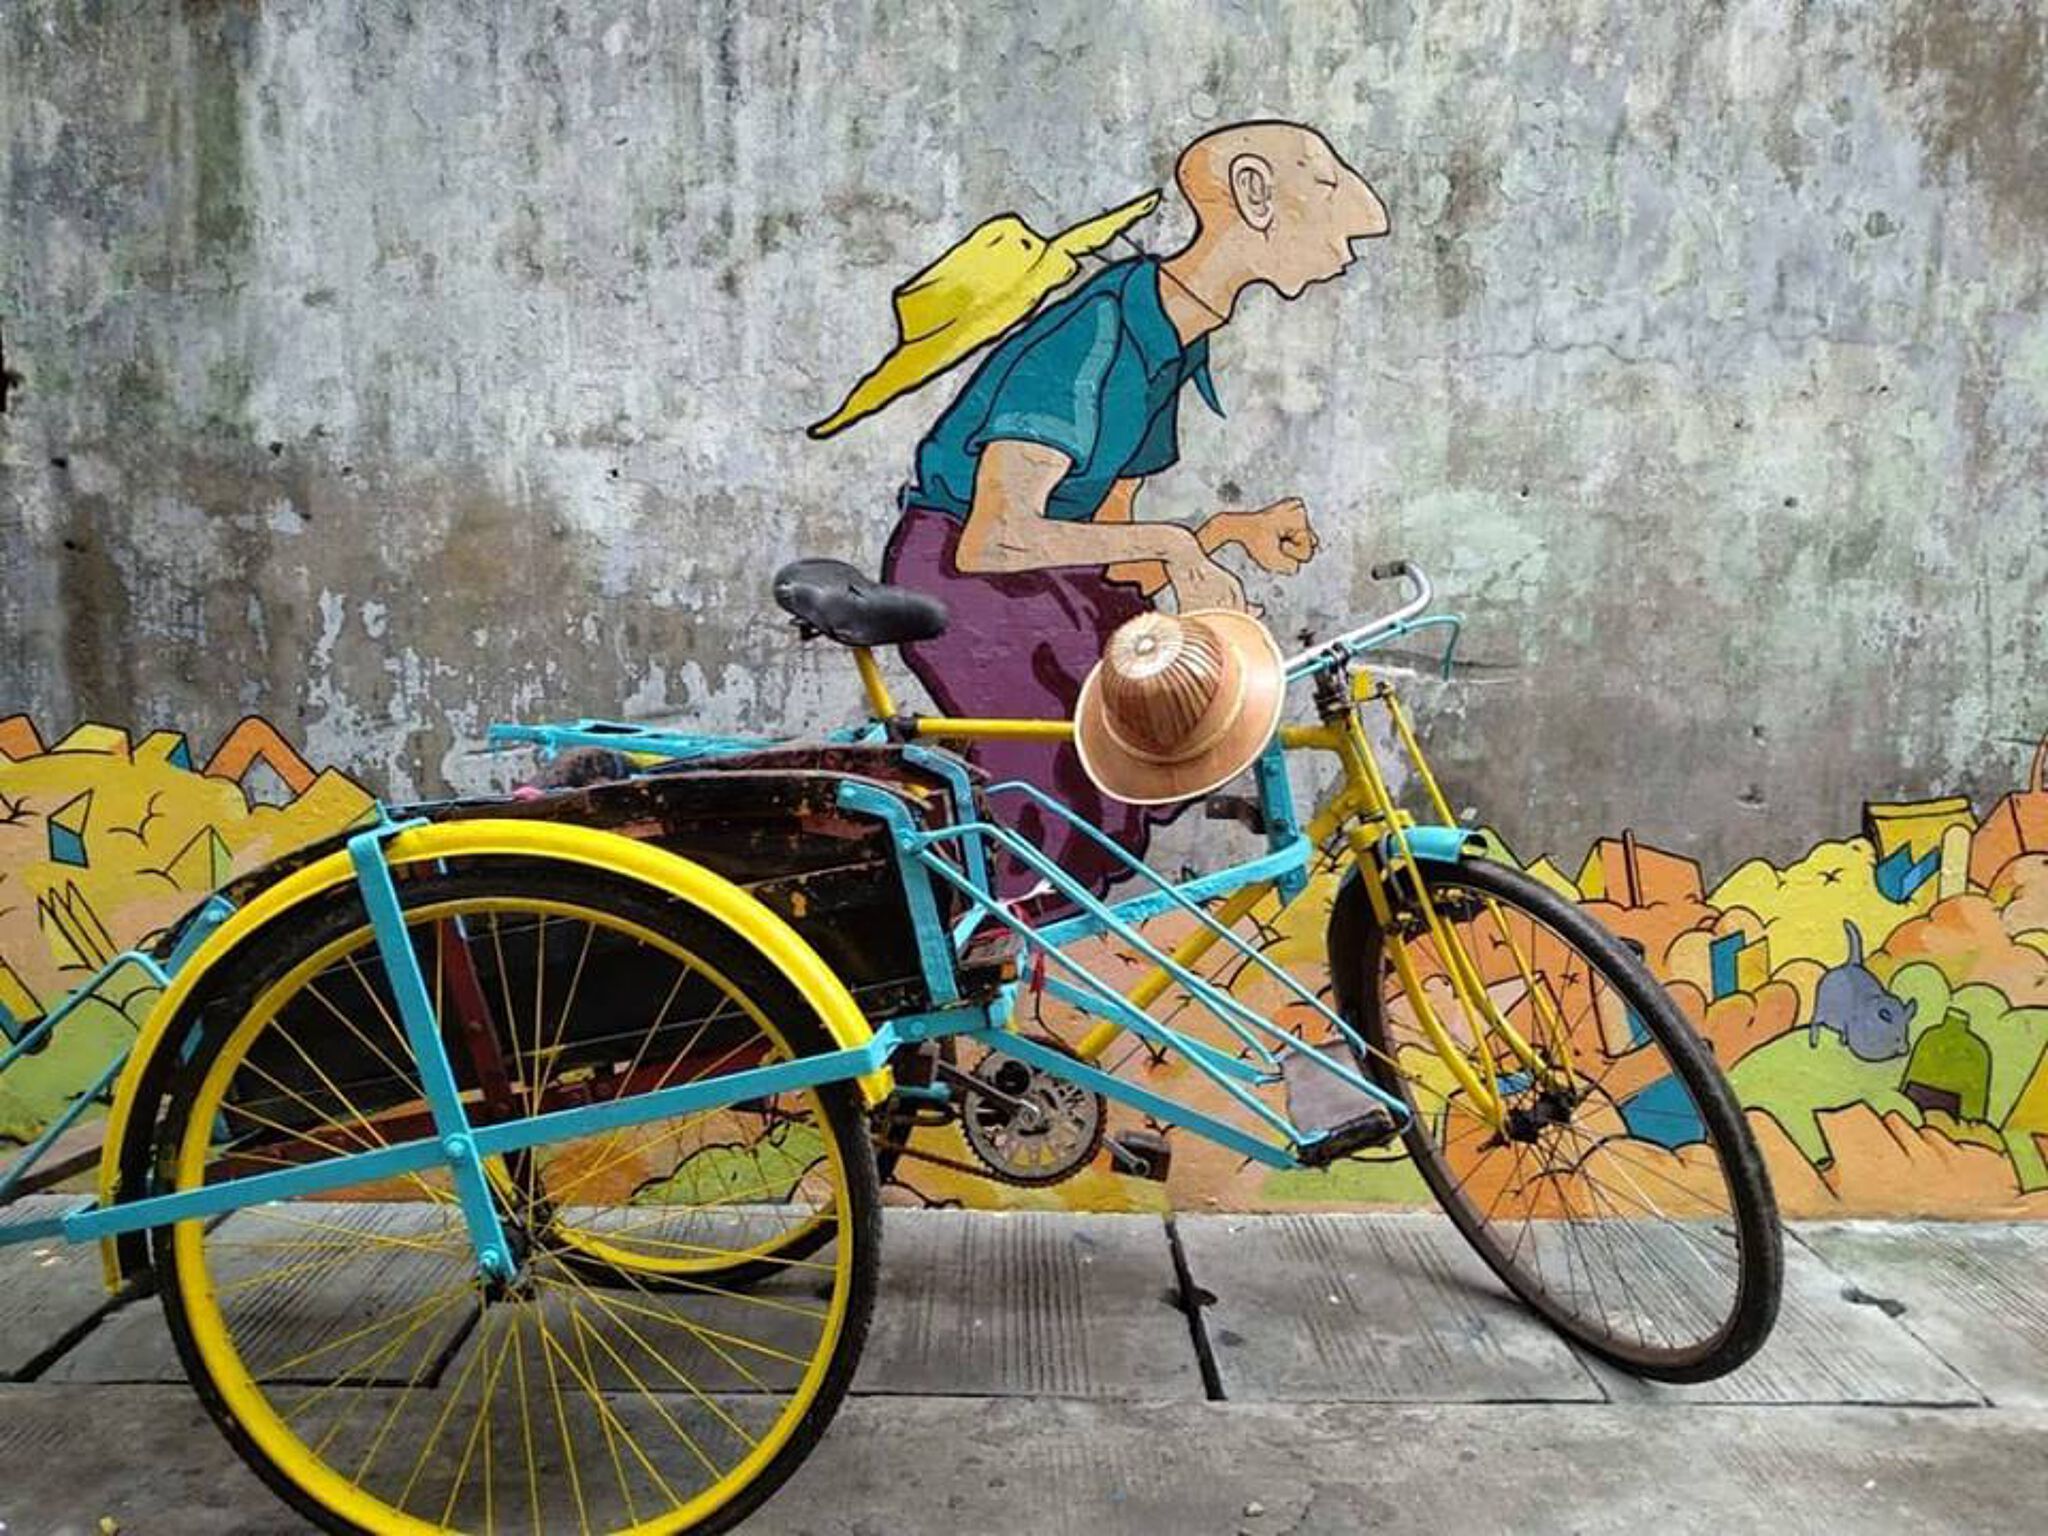 alexandre bertrand&mdash;Htun Htun on his rickshaw